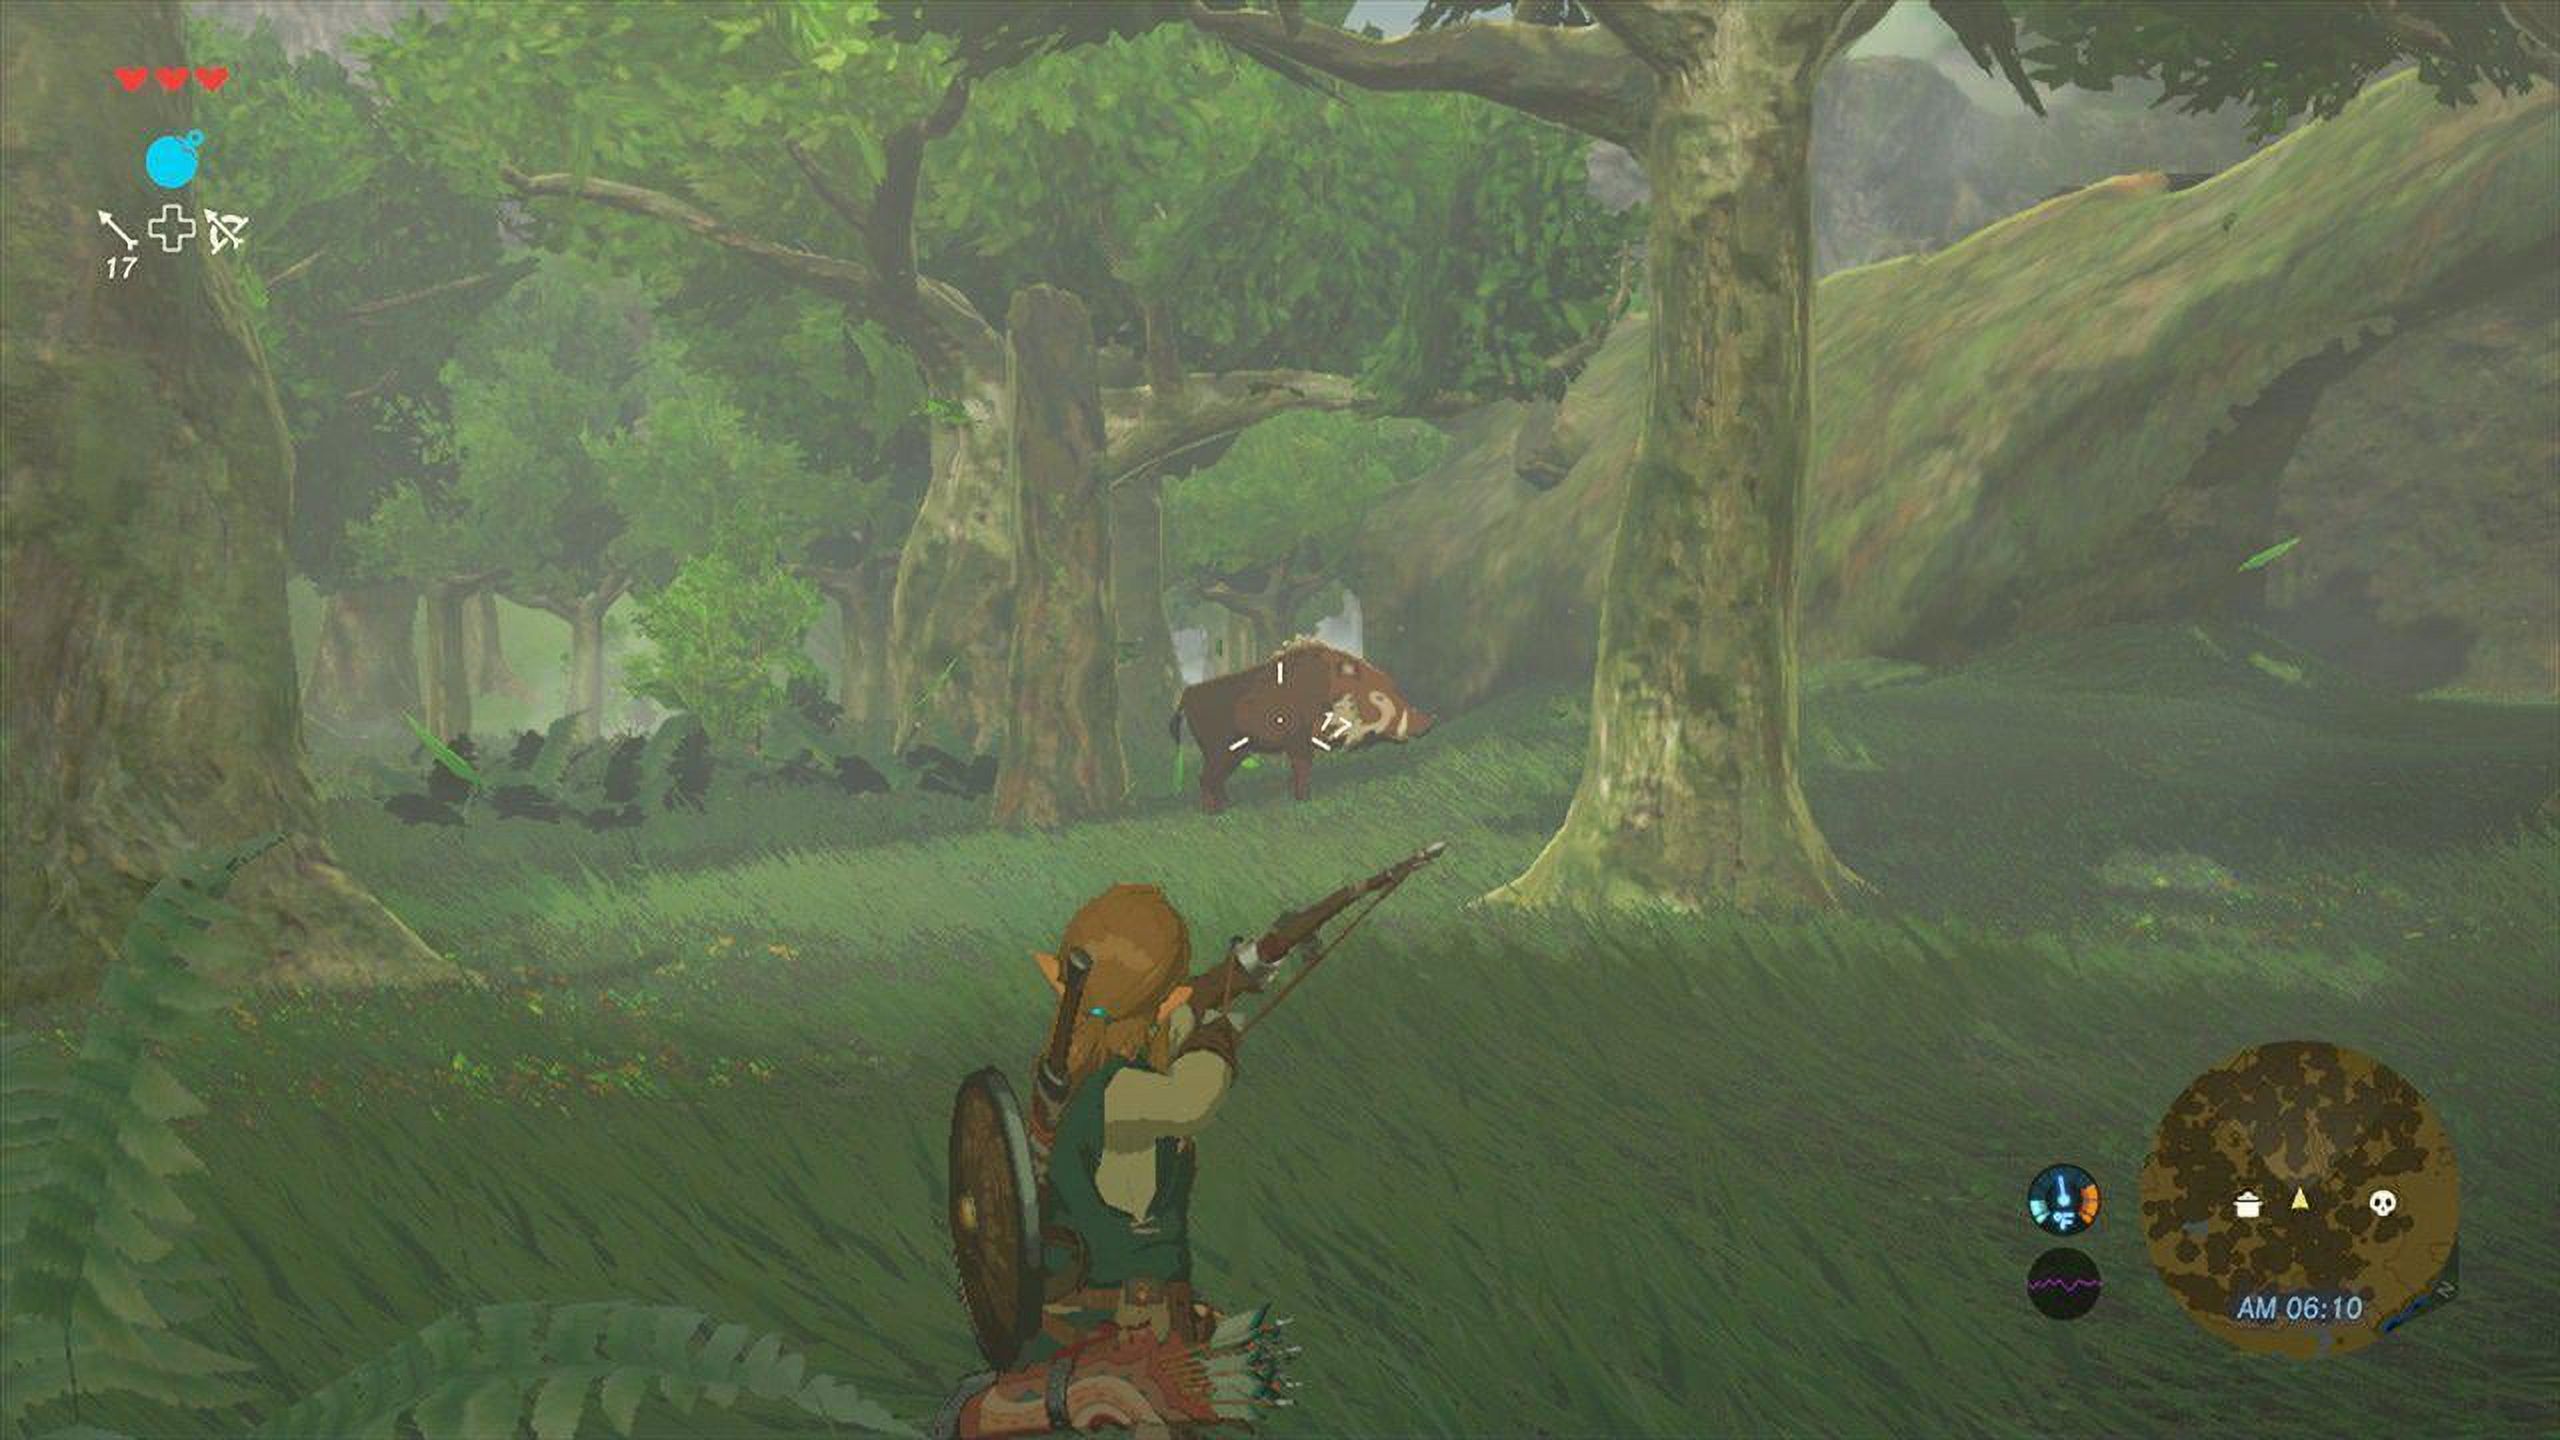 The Legend of Zelda: Breath of the Wild - Nintendo Switch - image 14 of 17